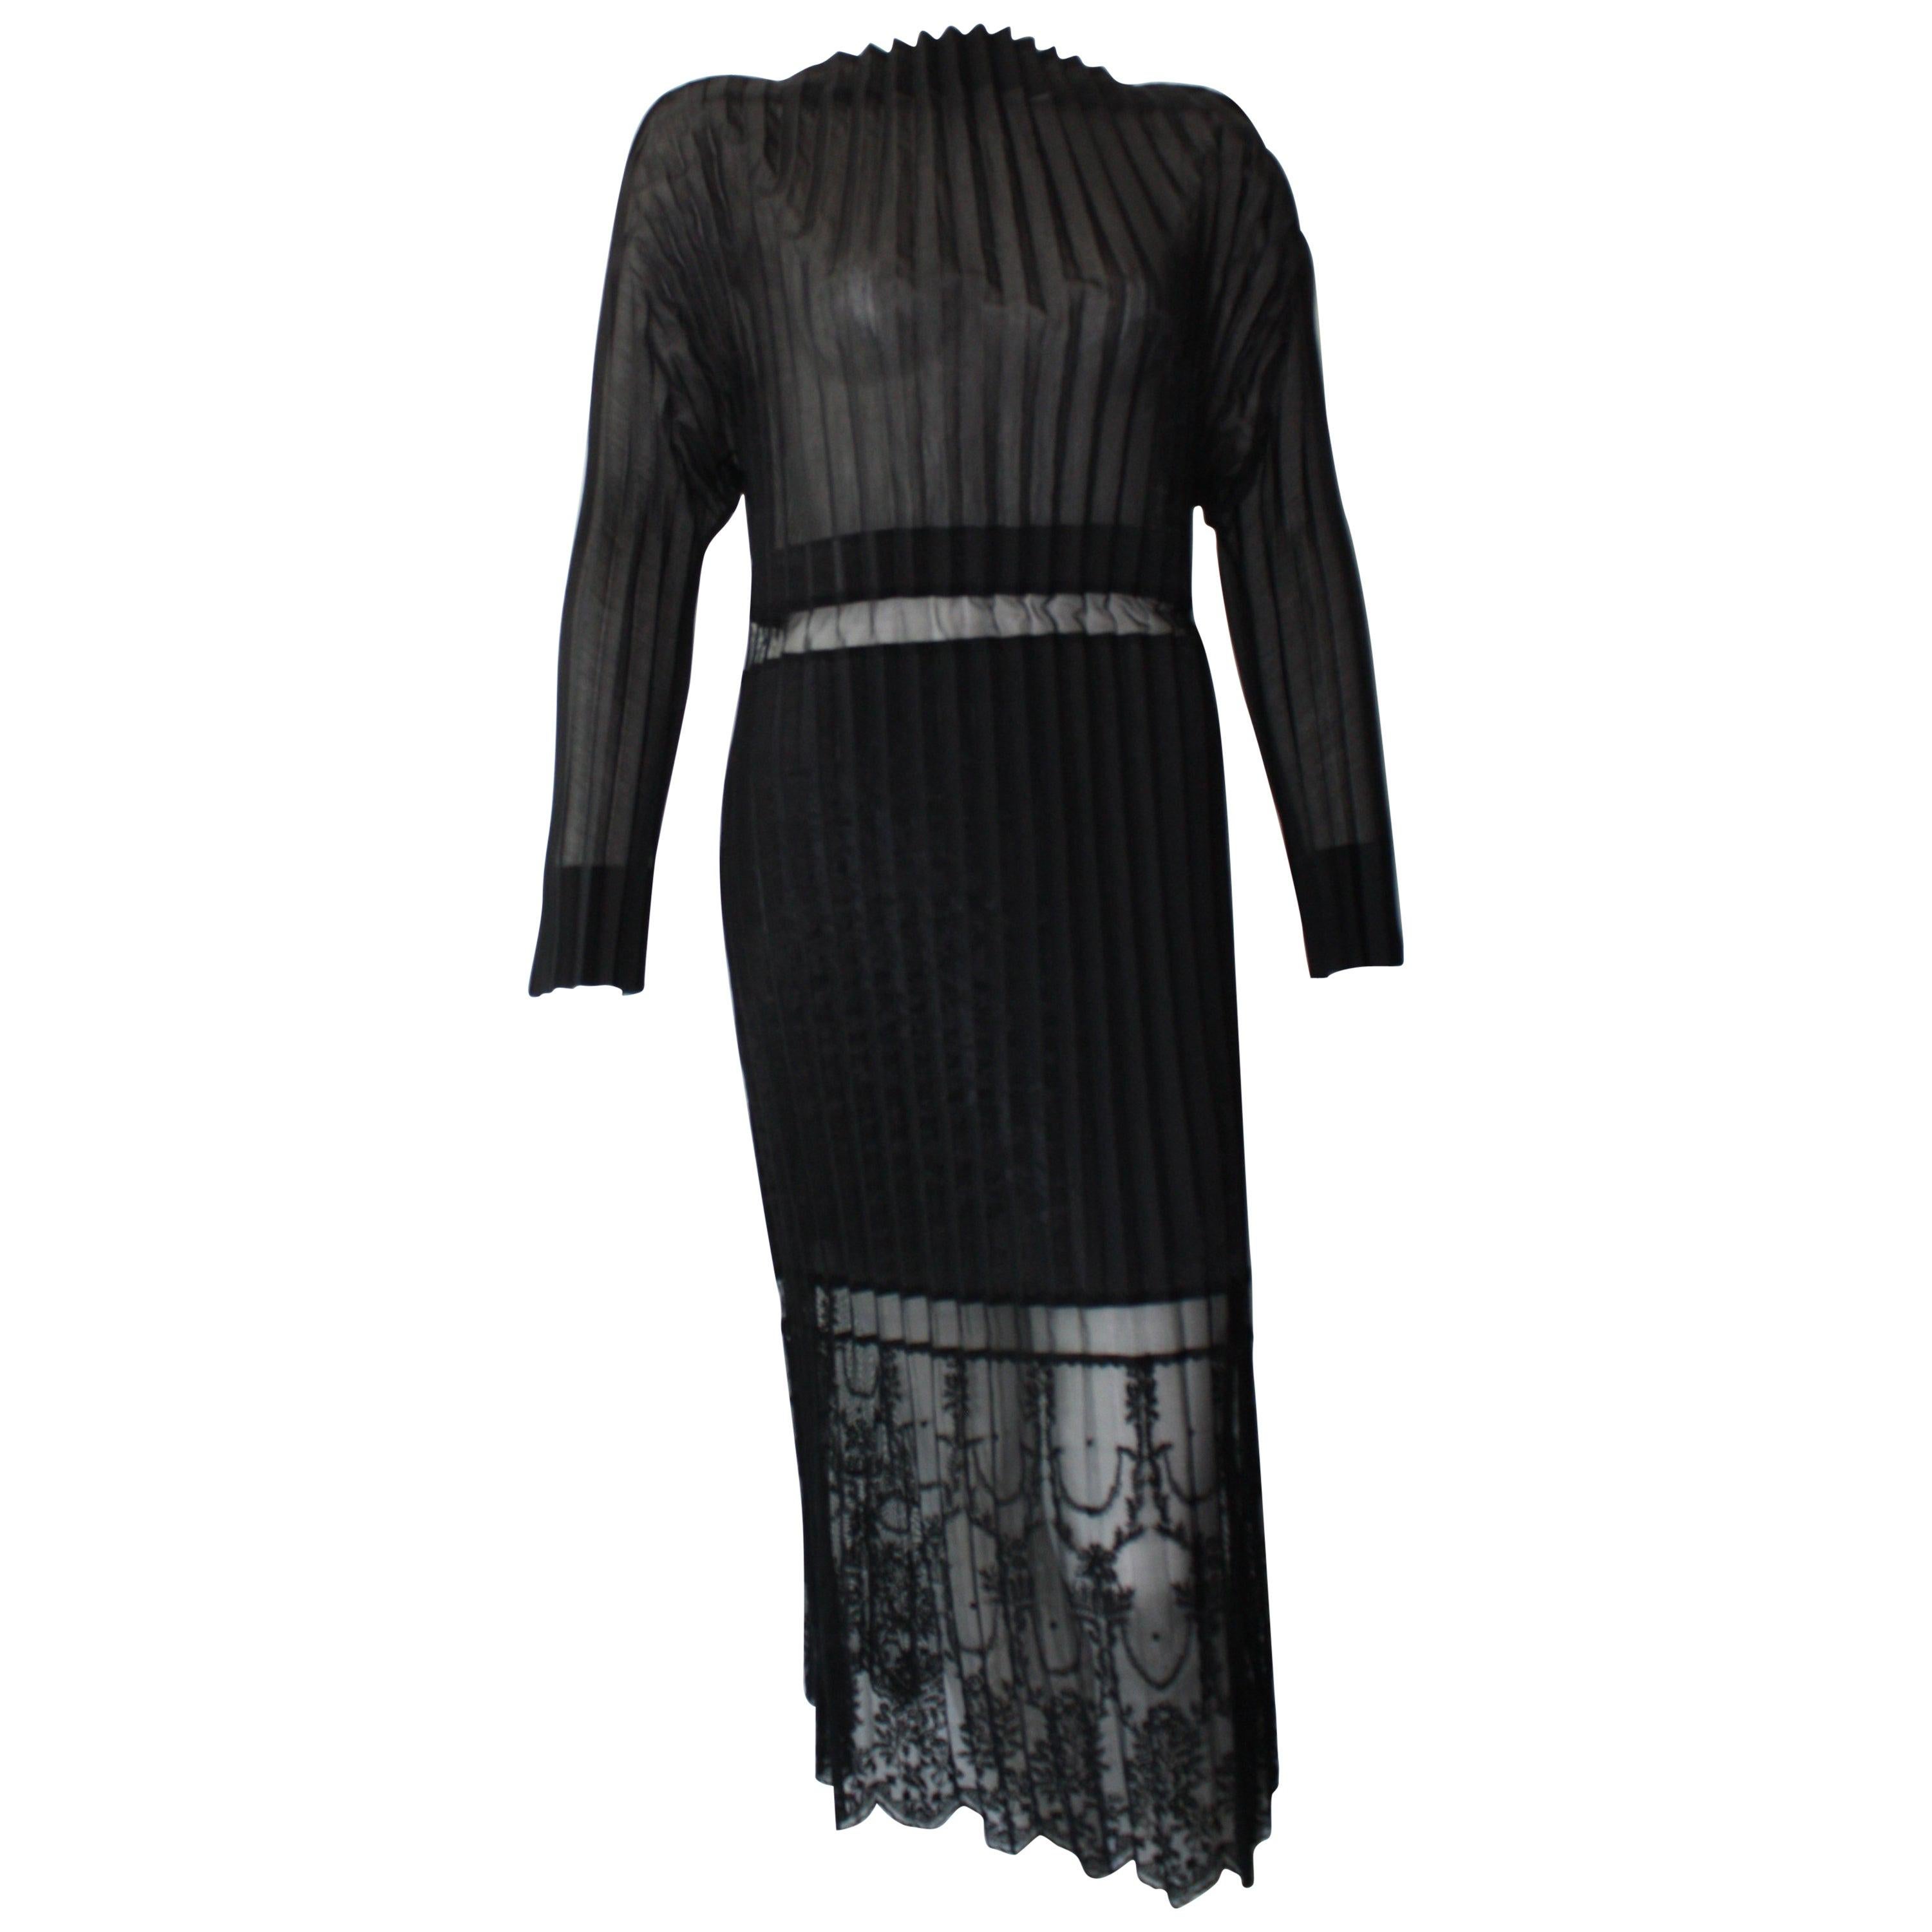 Stella McCartney Black Midi Sheer and Pleated Lace Dress Size 42